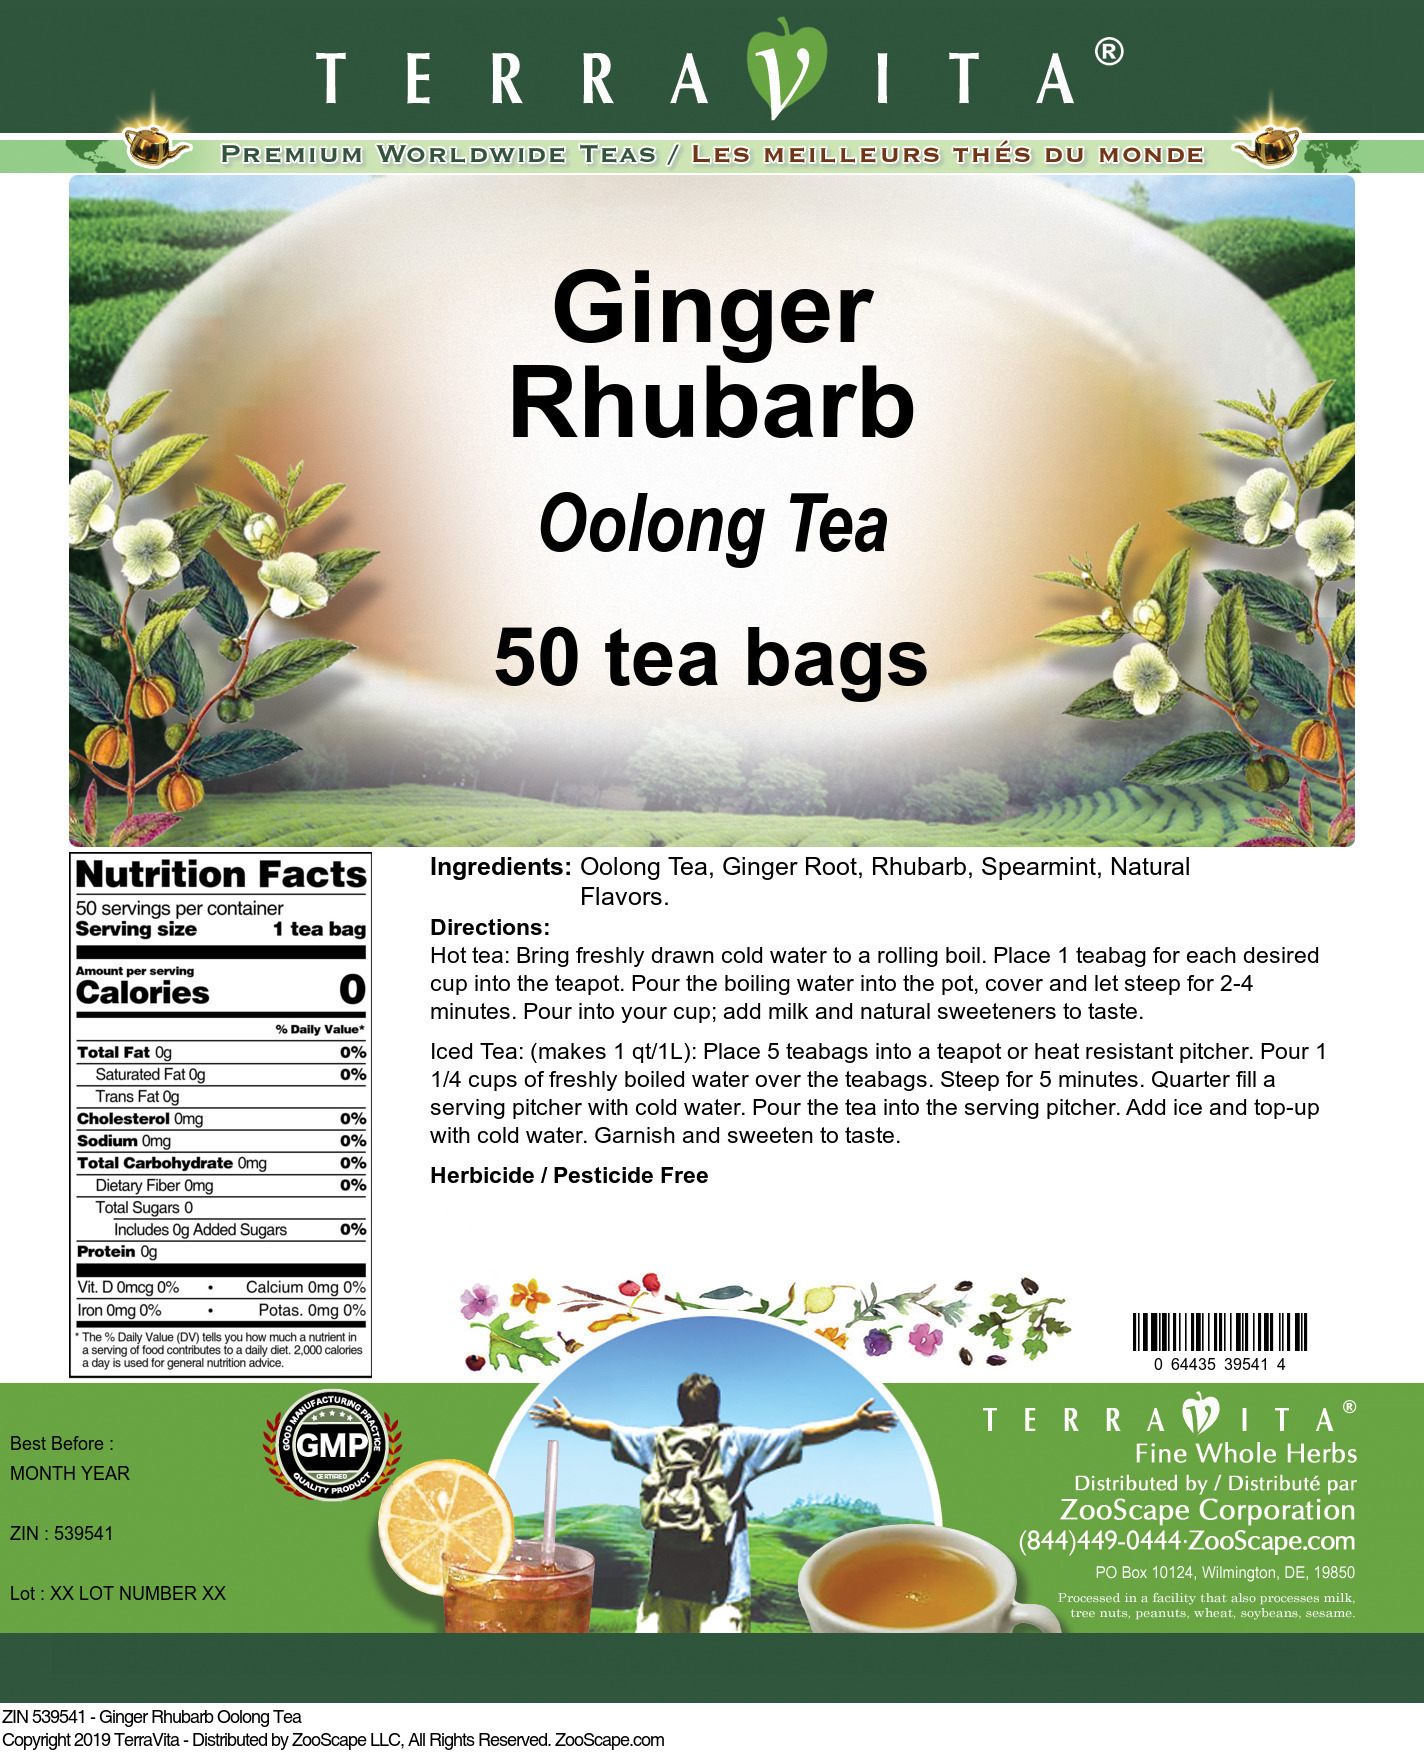 Ginger Rhubarb Oolong Tea - Label